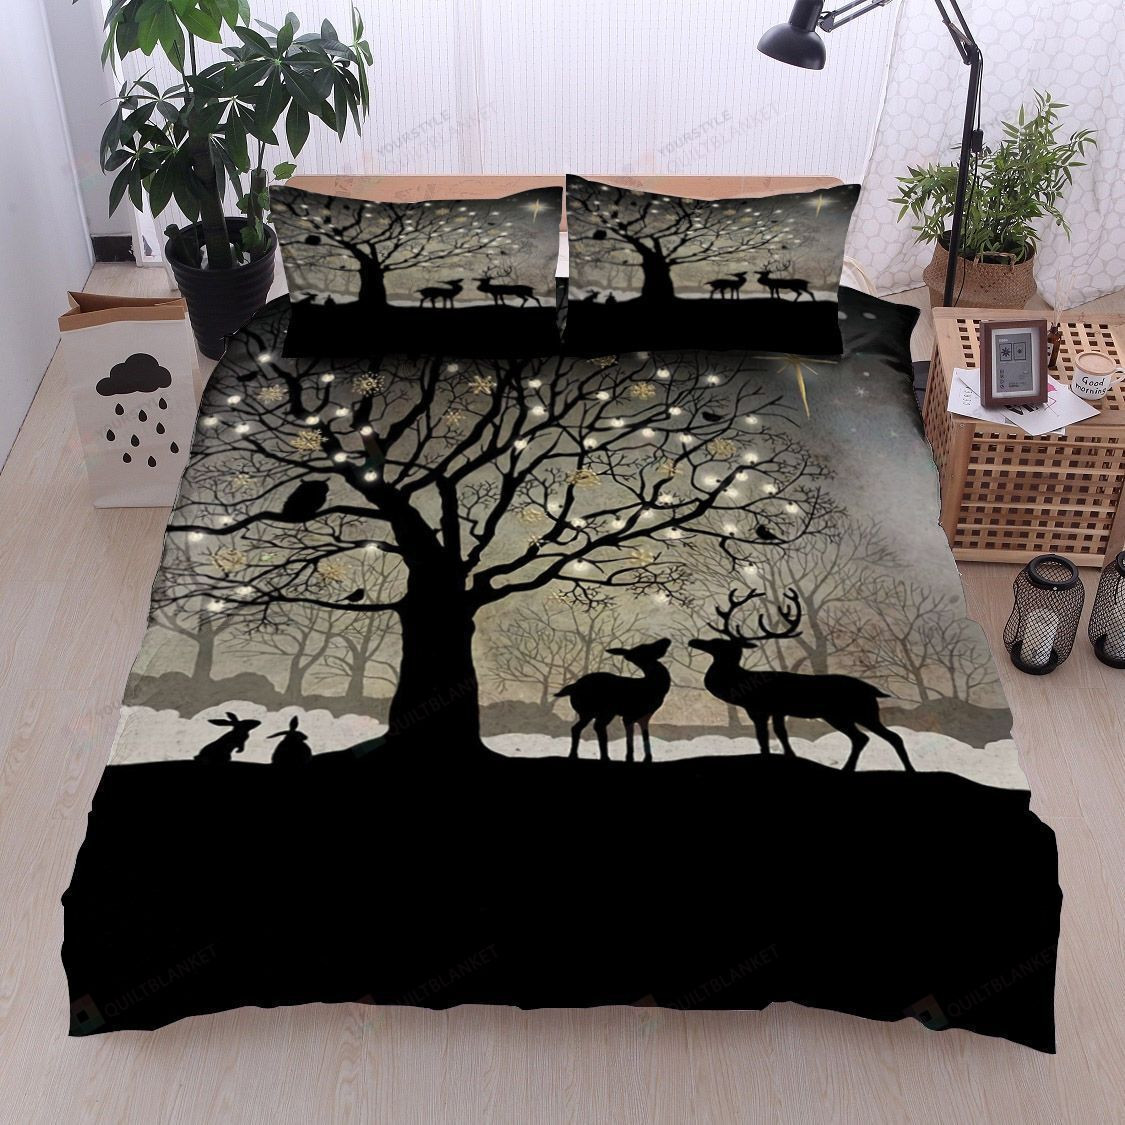 3D Christmas Tree Reindeer Owl Rabbit Cotton Bed Sheets Spread Comforter Duvet Cover Bedding Sets